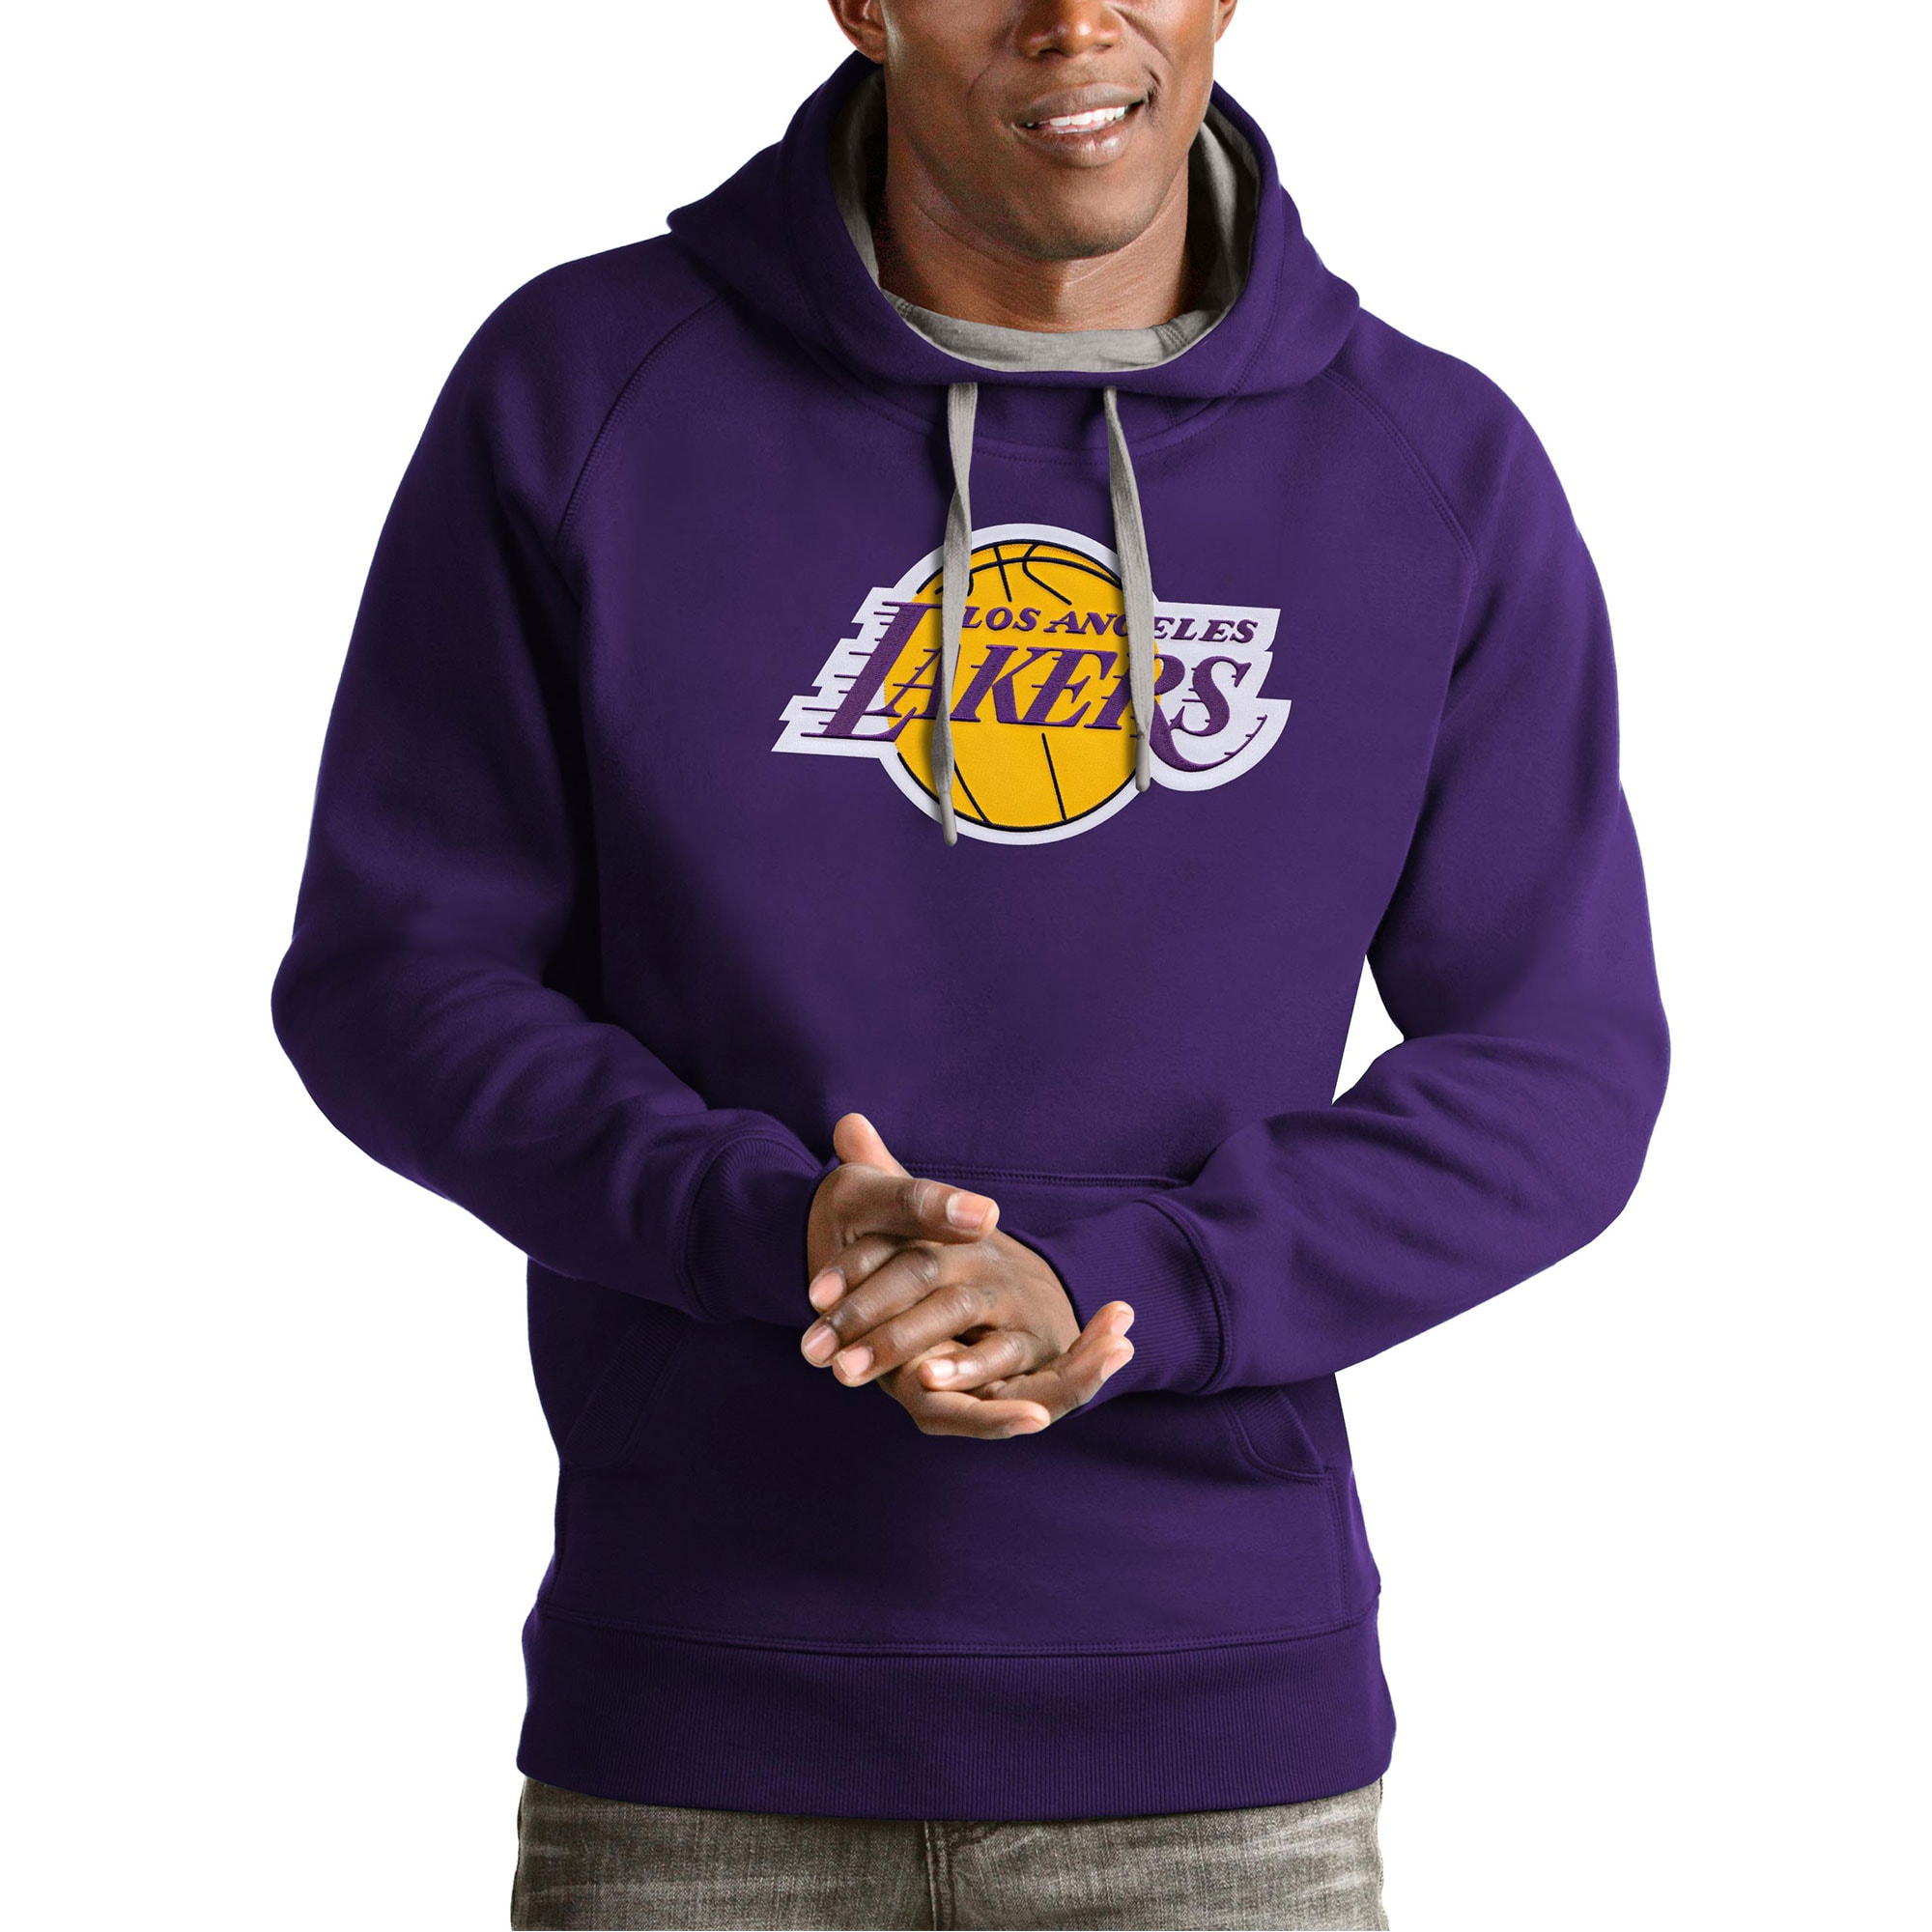 Men's Antigua Purple Los Angeles Lakers Team Logo Victory Pullover Hoodie - image 1 of 1